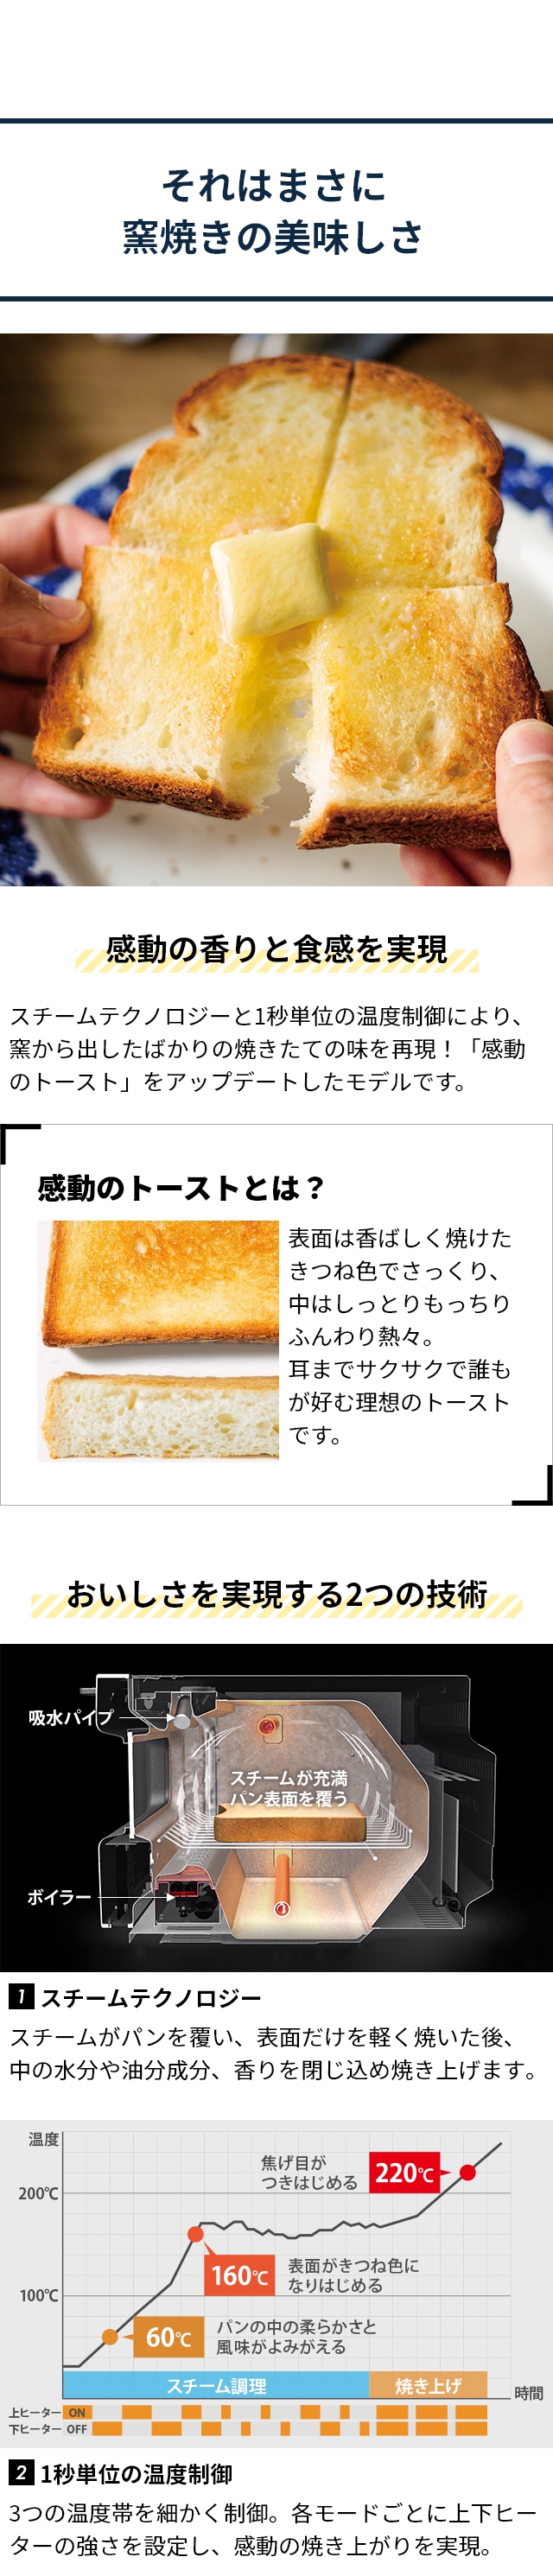 BALMUDA The Toaster（バルミューダ ザ・トースター）　K05A